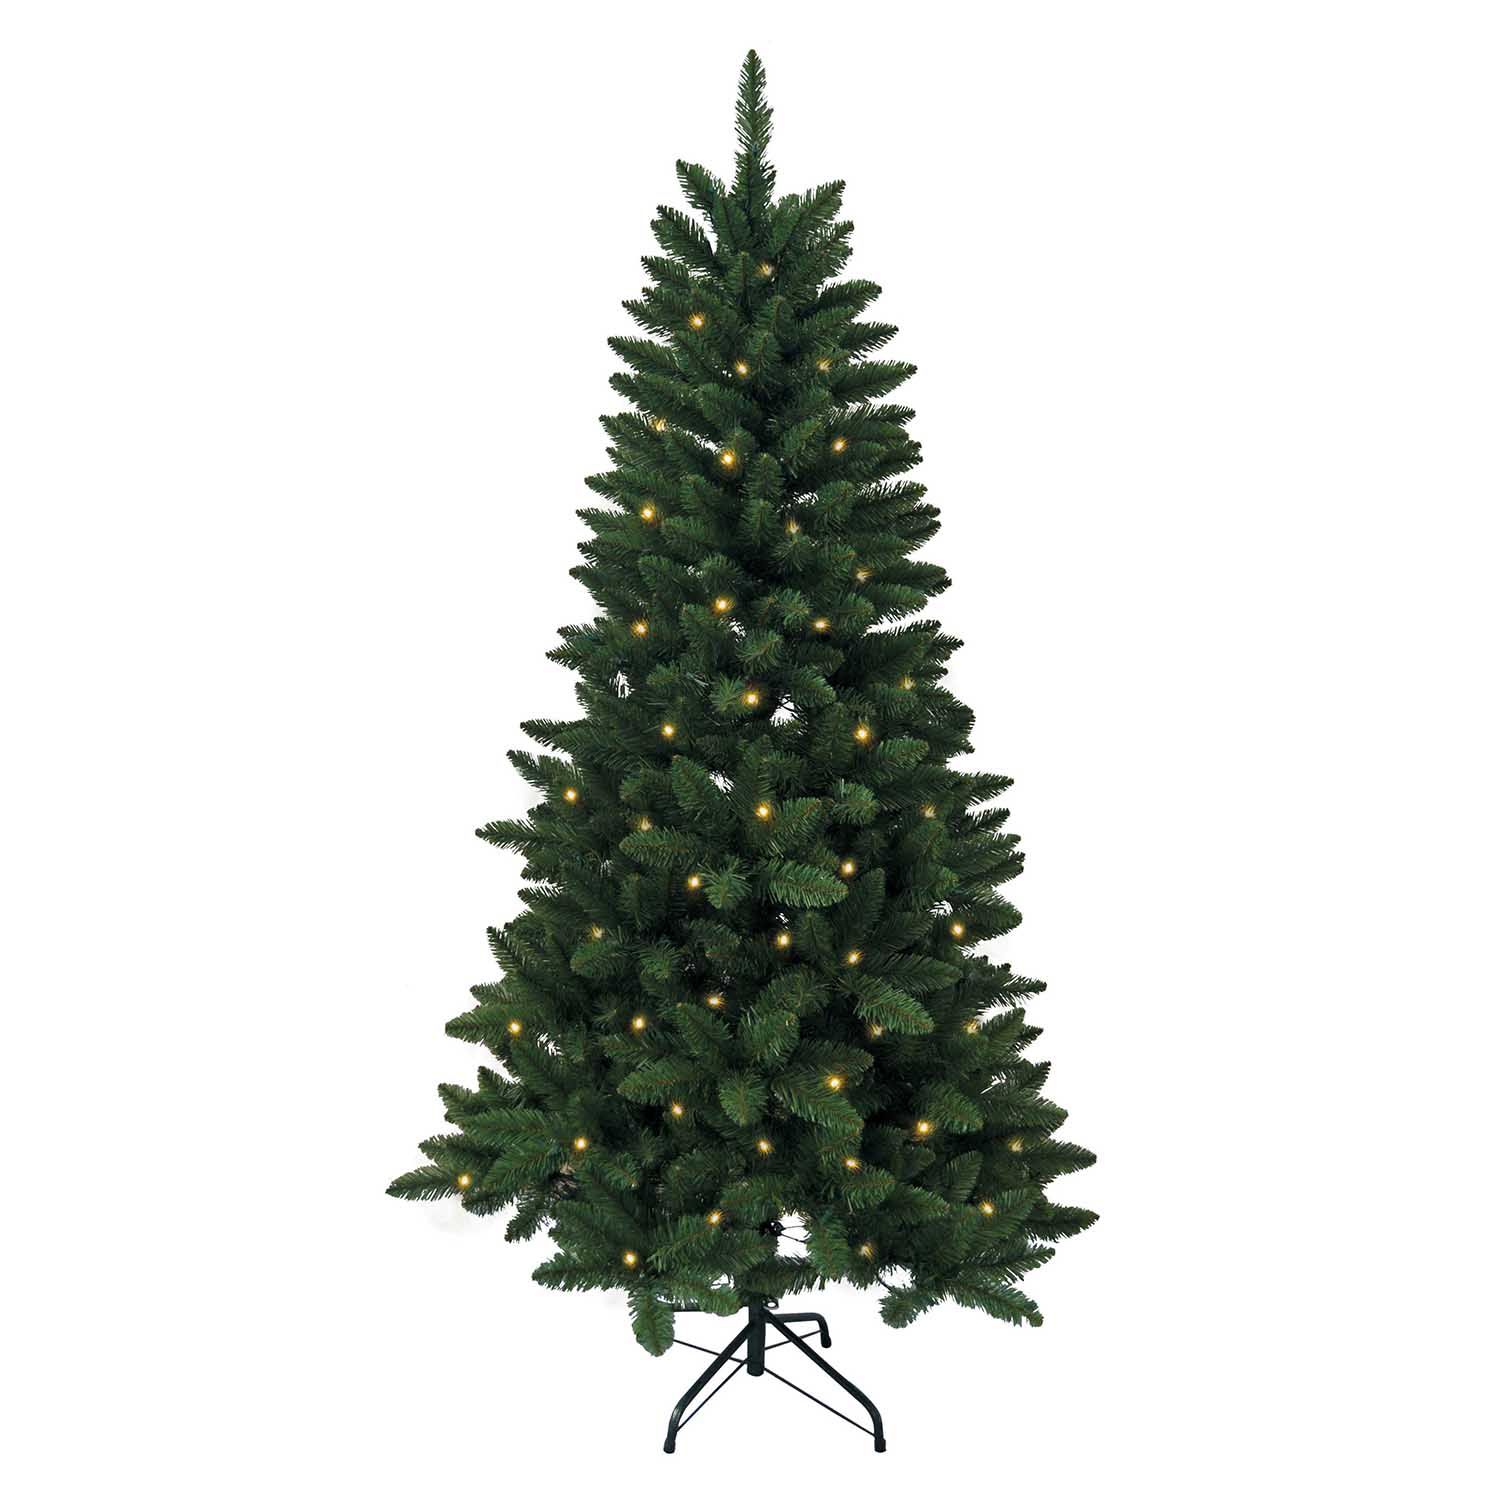 8 LED Ceramic Christmas Tree, Philadelphia Eagles